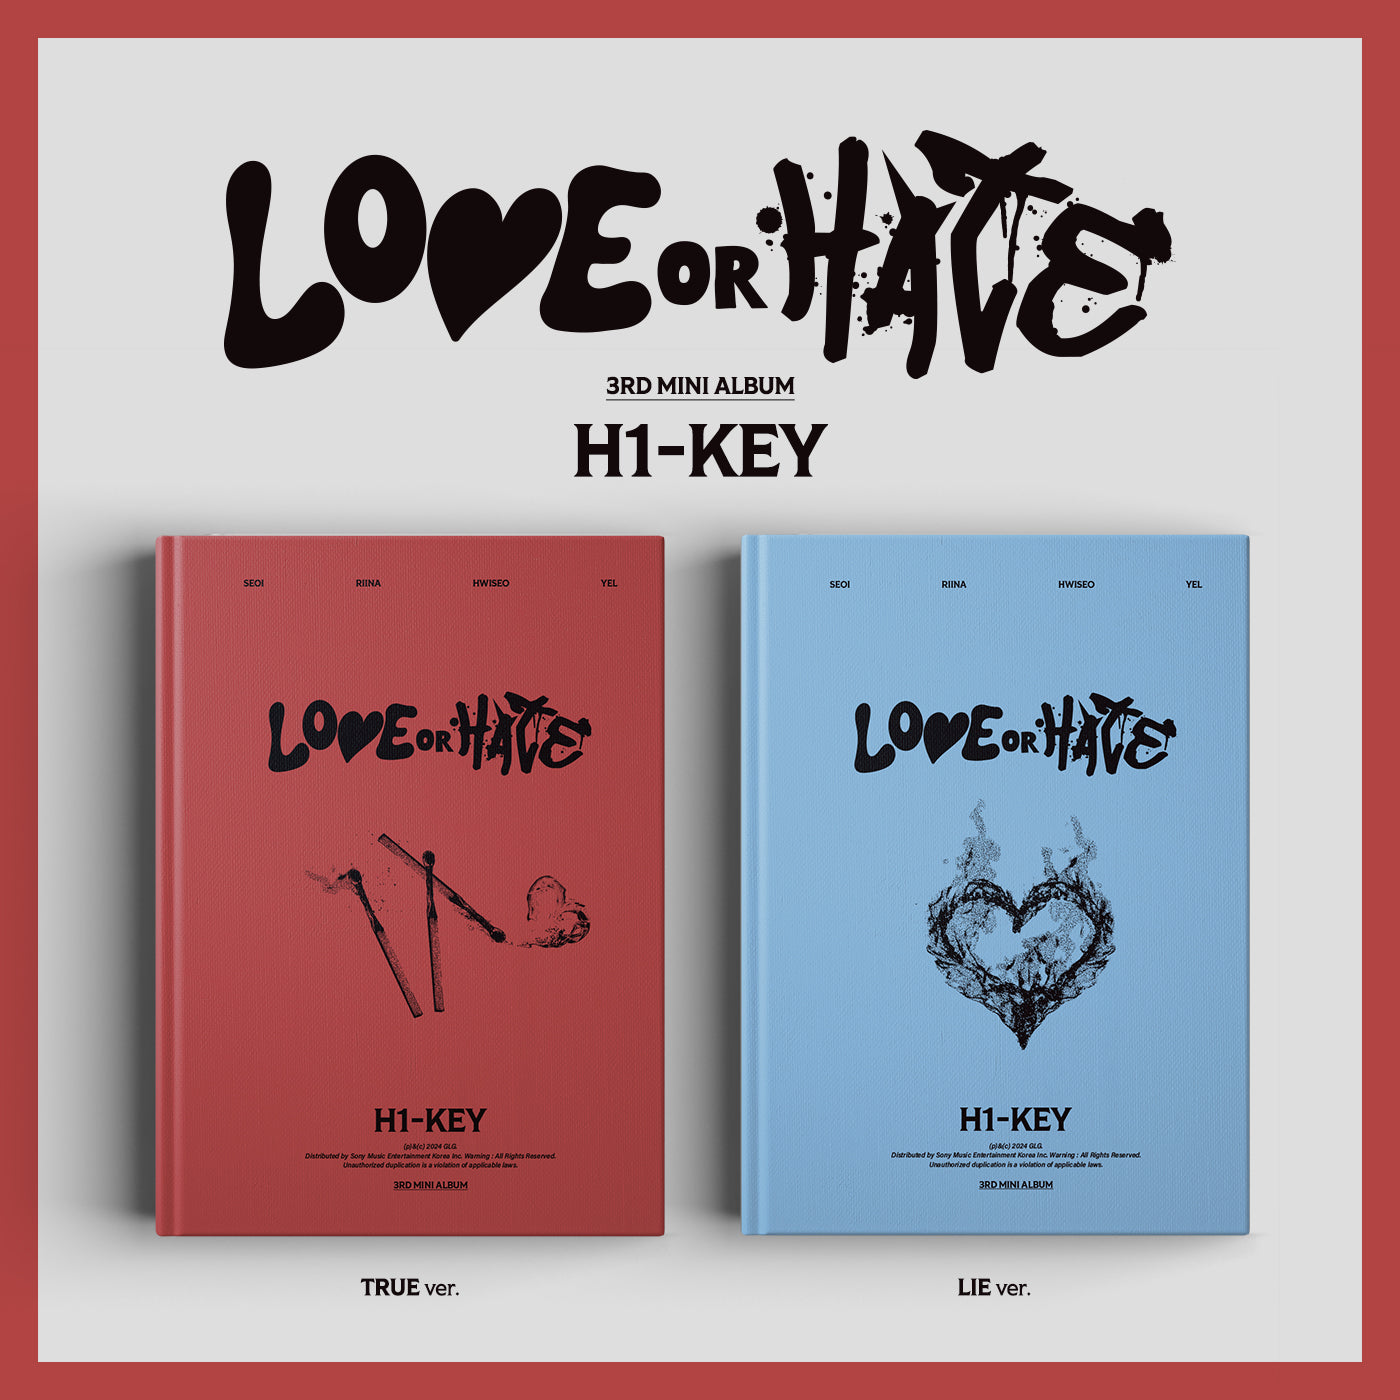 H1-KEY 3RD MINI ALBUM 'LOVE OR HATE' SET COVER